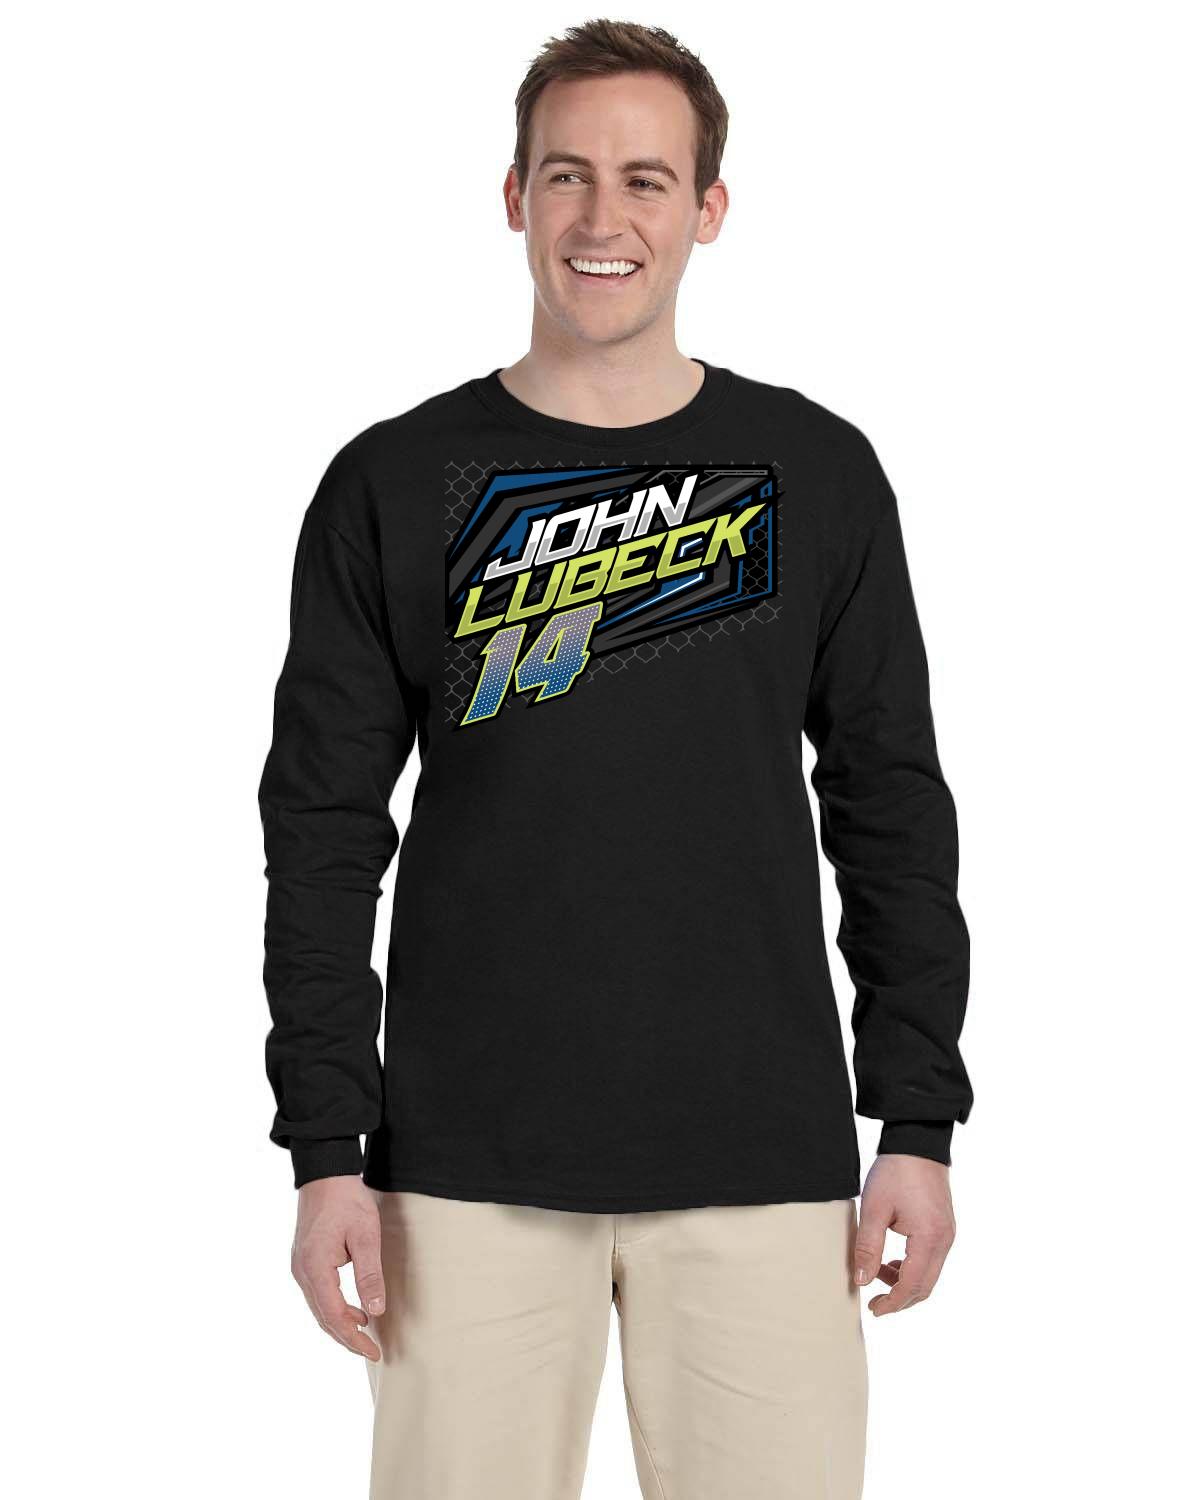 John Lubeck / Upfront Motorsports Adult Long-Sleeve T-Shirt